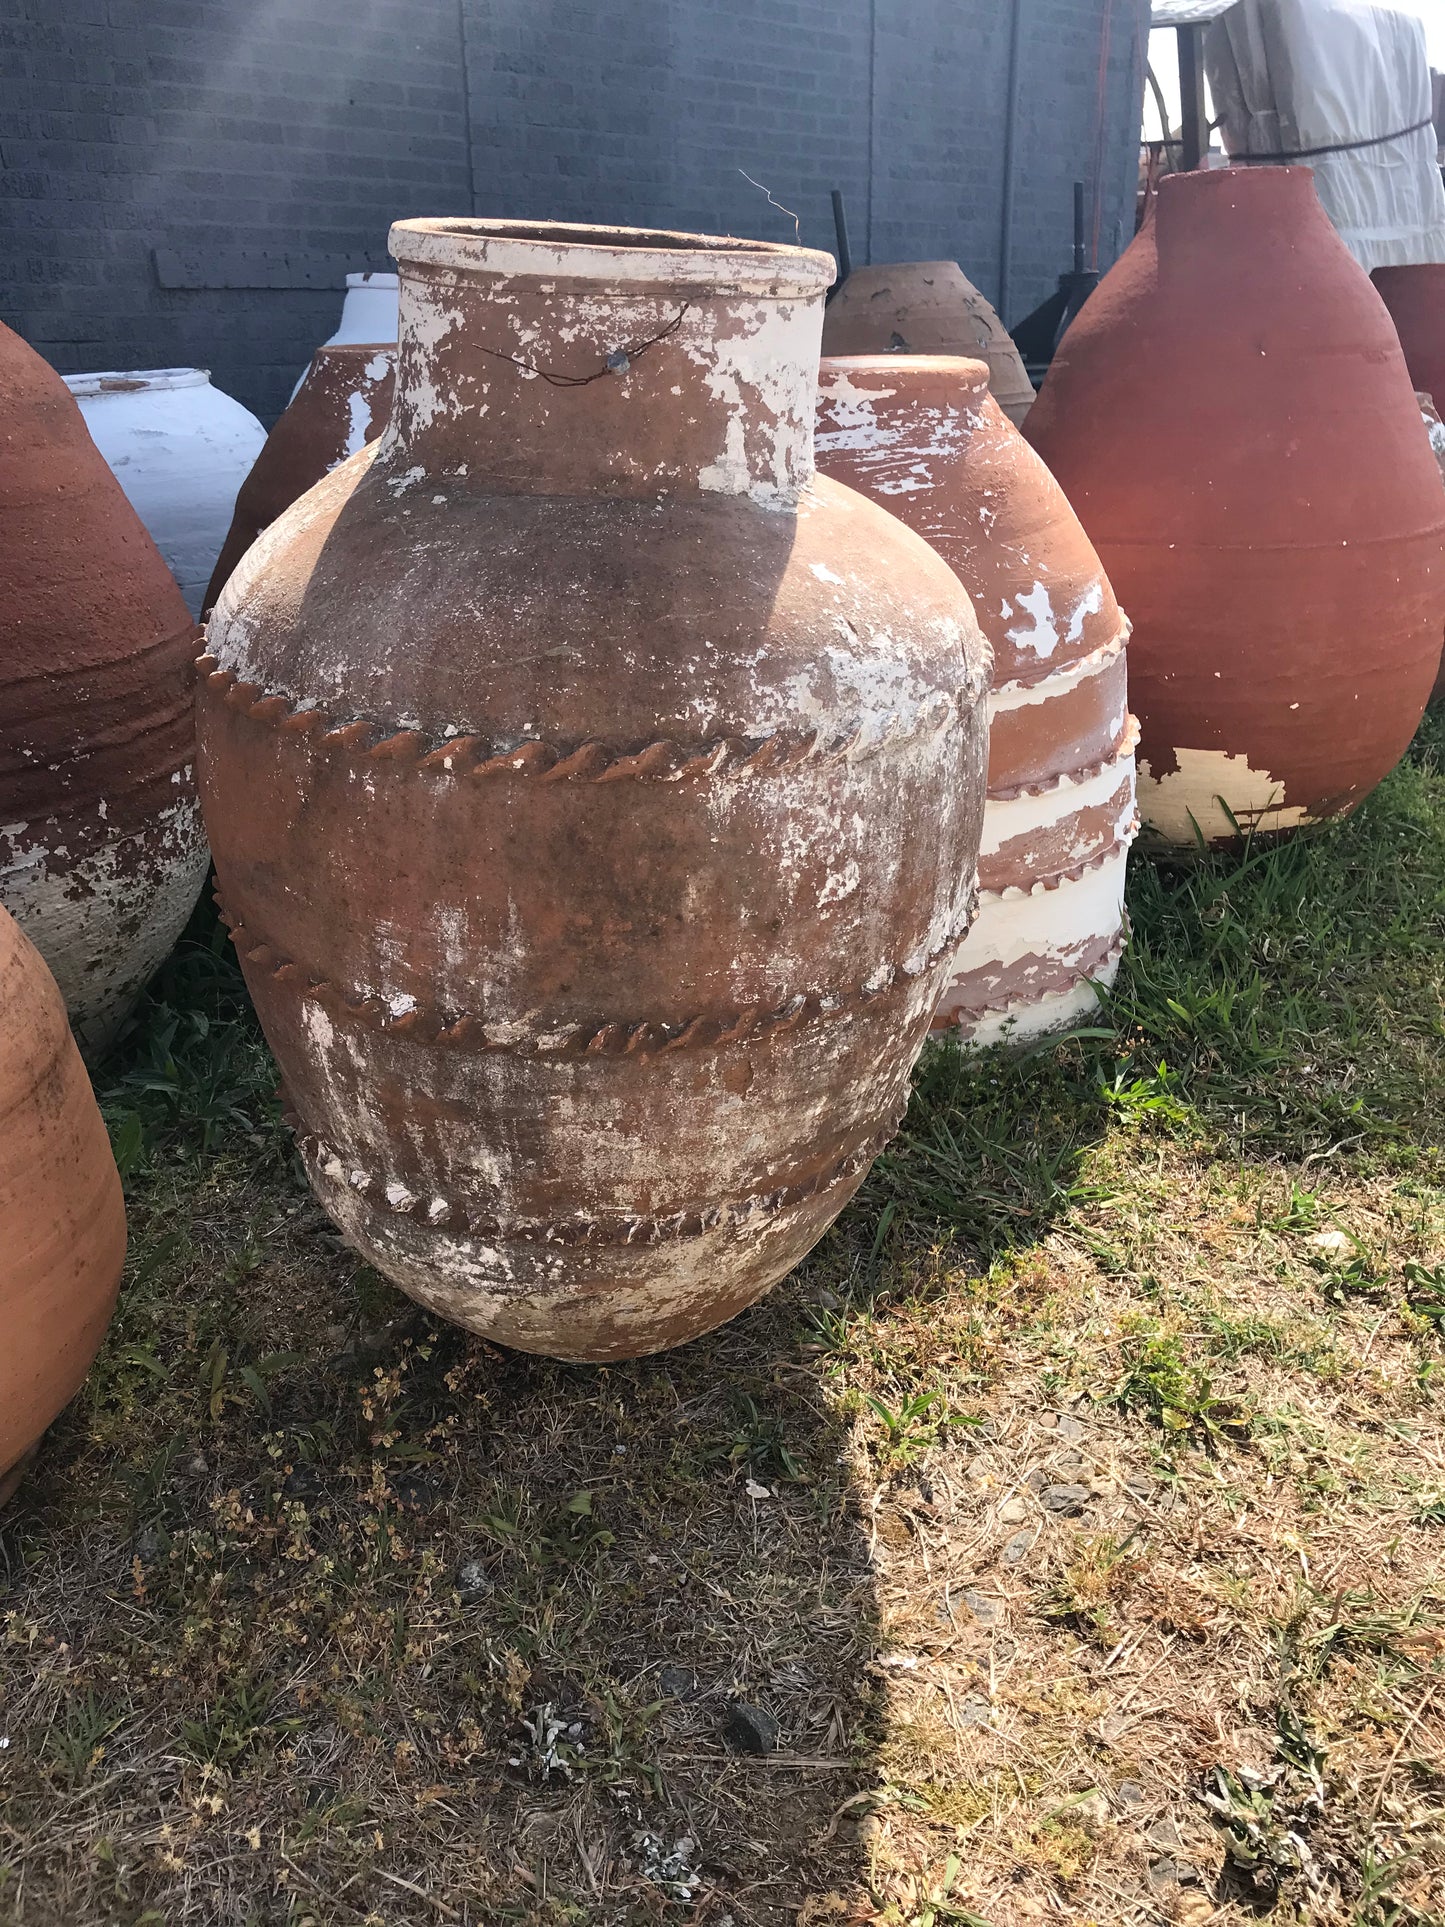 Rustic Turkish Urn